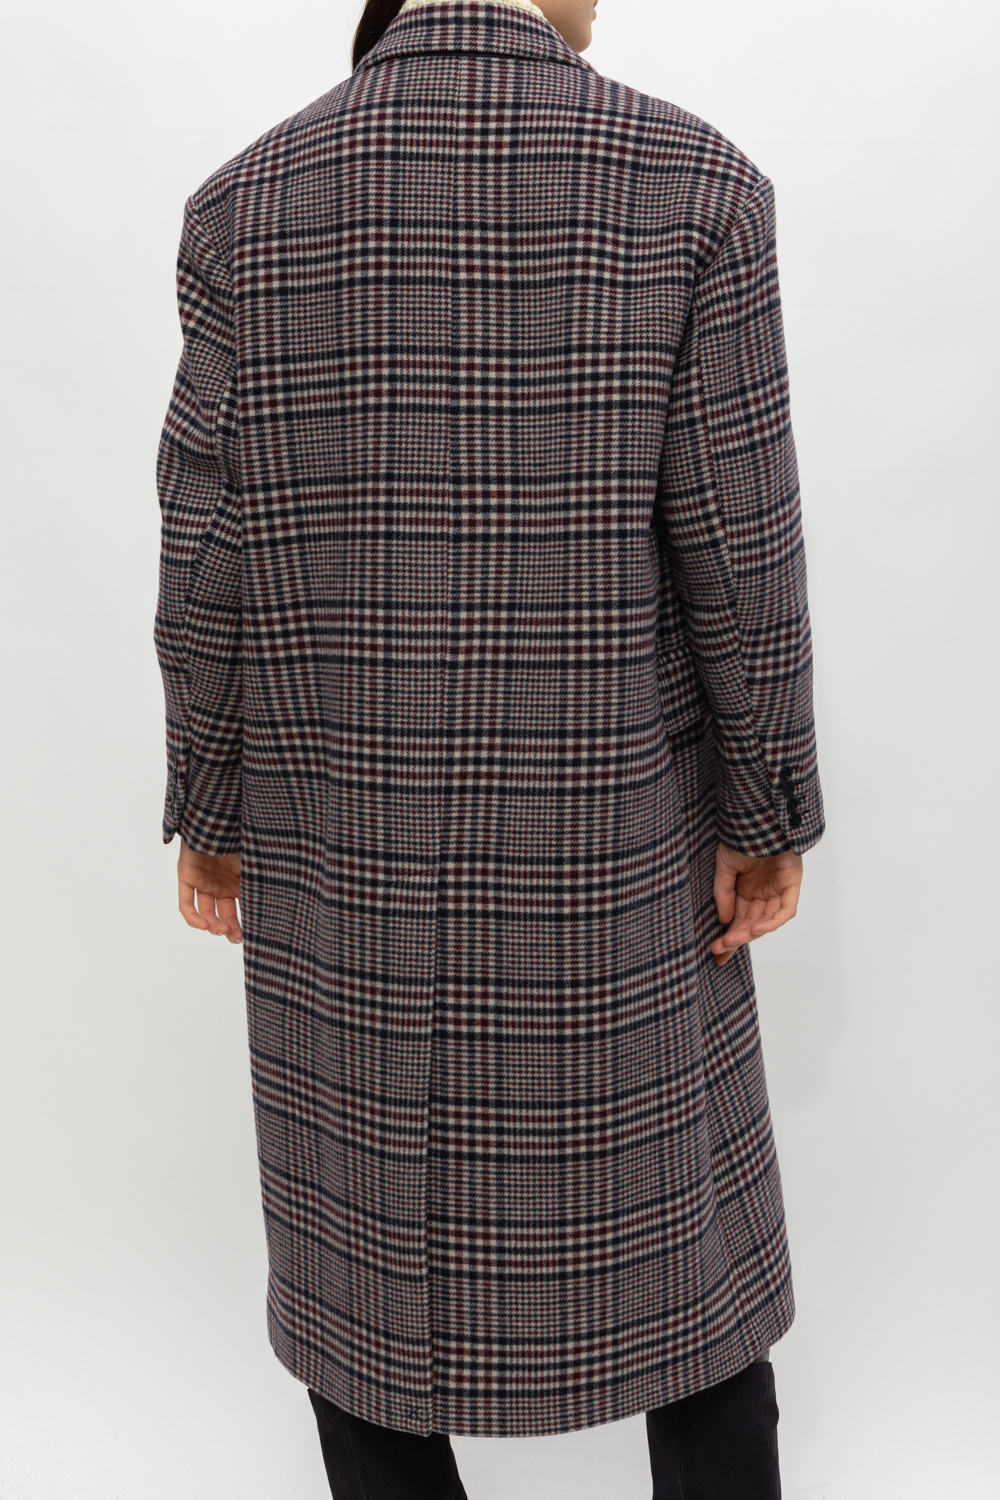 Isabel Marant ‘Lojimko’ coat